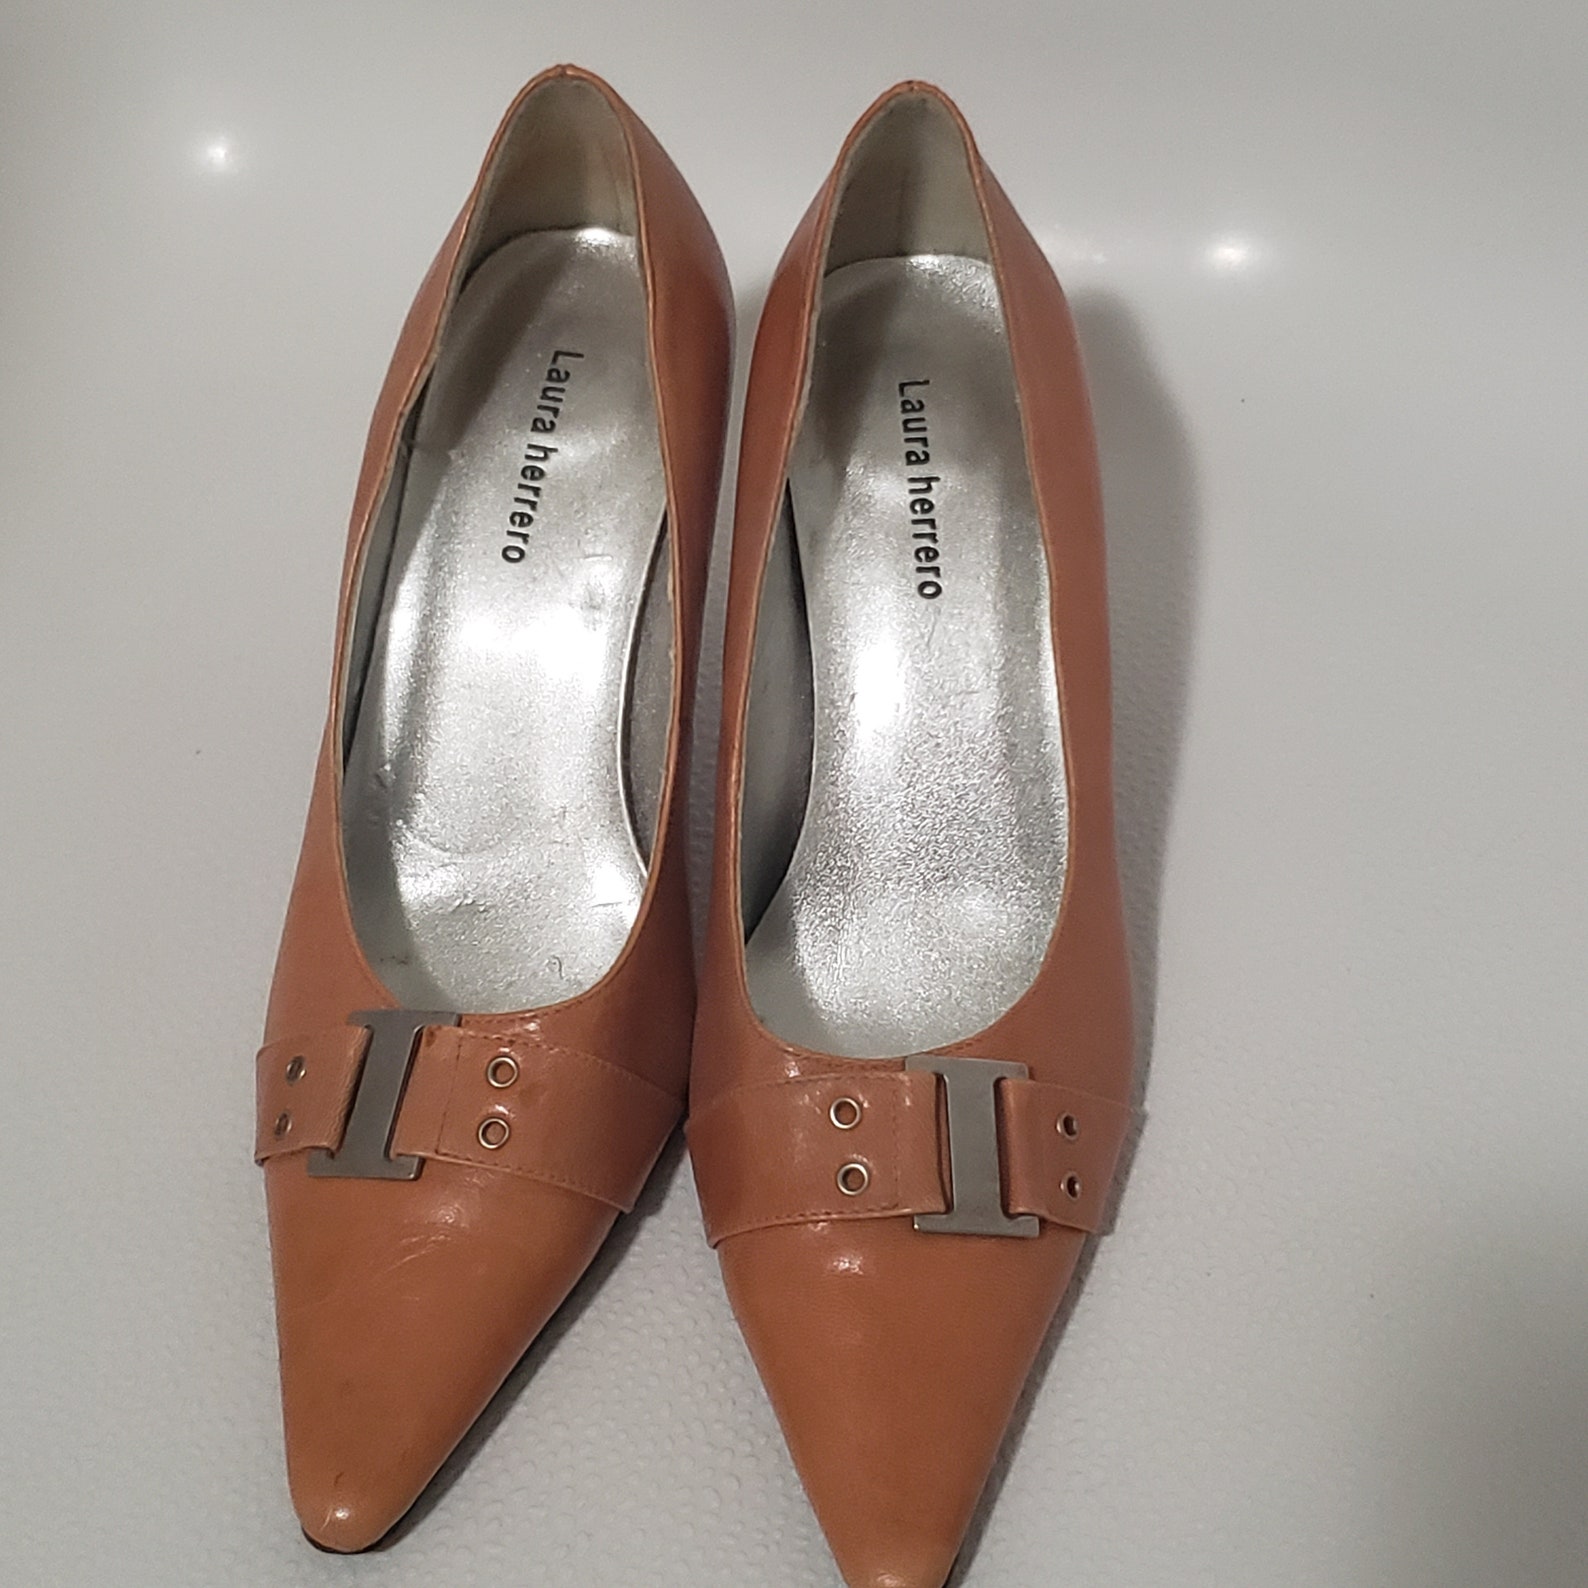 1 inch Heels orange heels | Etsy